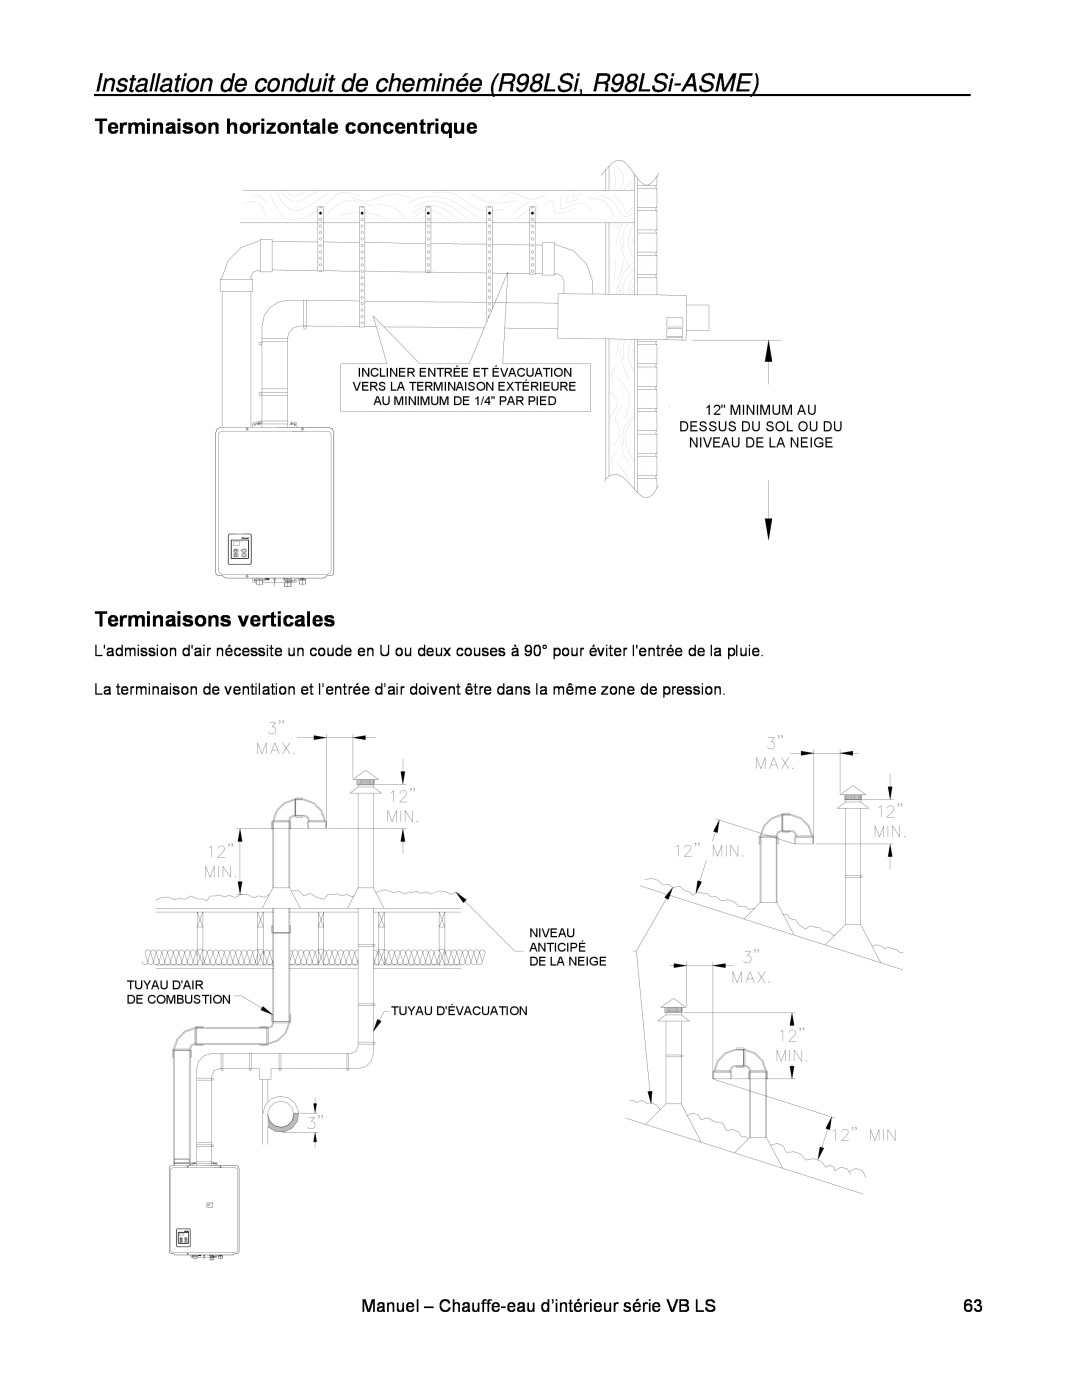 Rinnai RL75I, RL94I installation manual Terminaison horizontale concentrique, Terminaisons verticales 